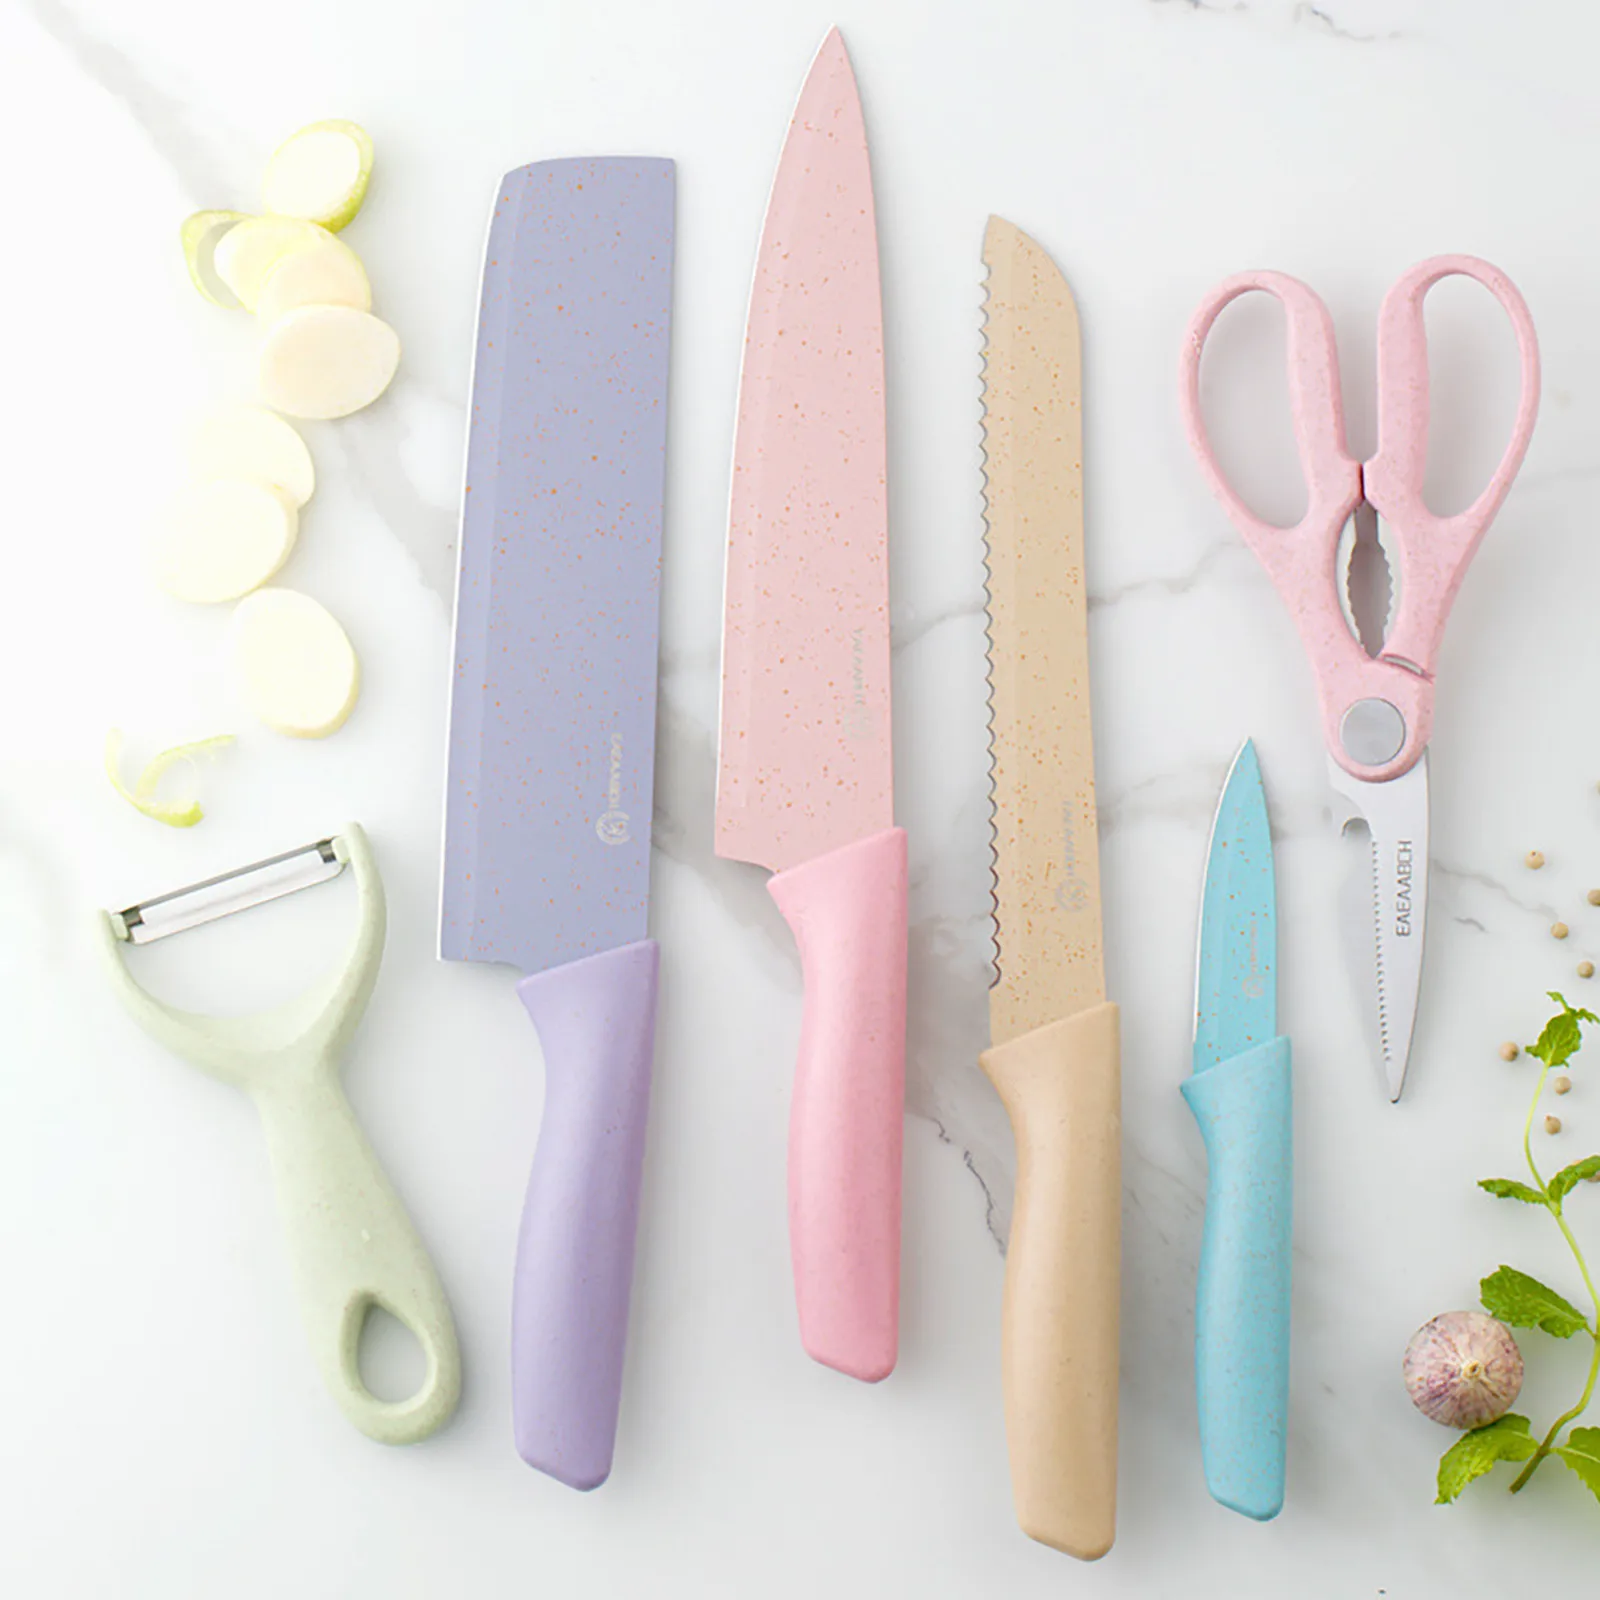 https://ae01.alicdn.com/kf/S14aa5c3ca34c4e1a8cc0246b5551cf08t/6pcs-sets-Colorful-Kitchen-Knives-Set-Stainless-Steel-Kitchen-Knife-Set-Without-Block-Cute-Fruit-Knife.jpg